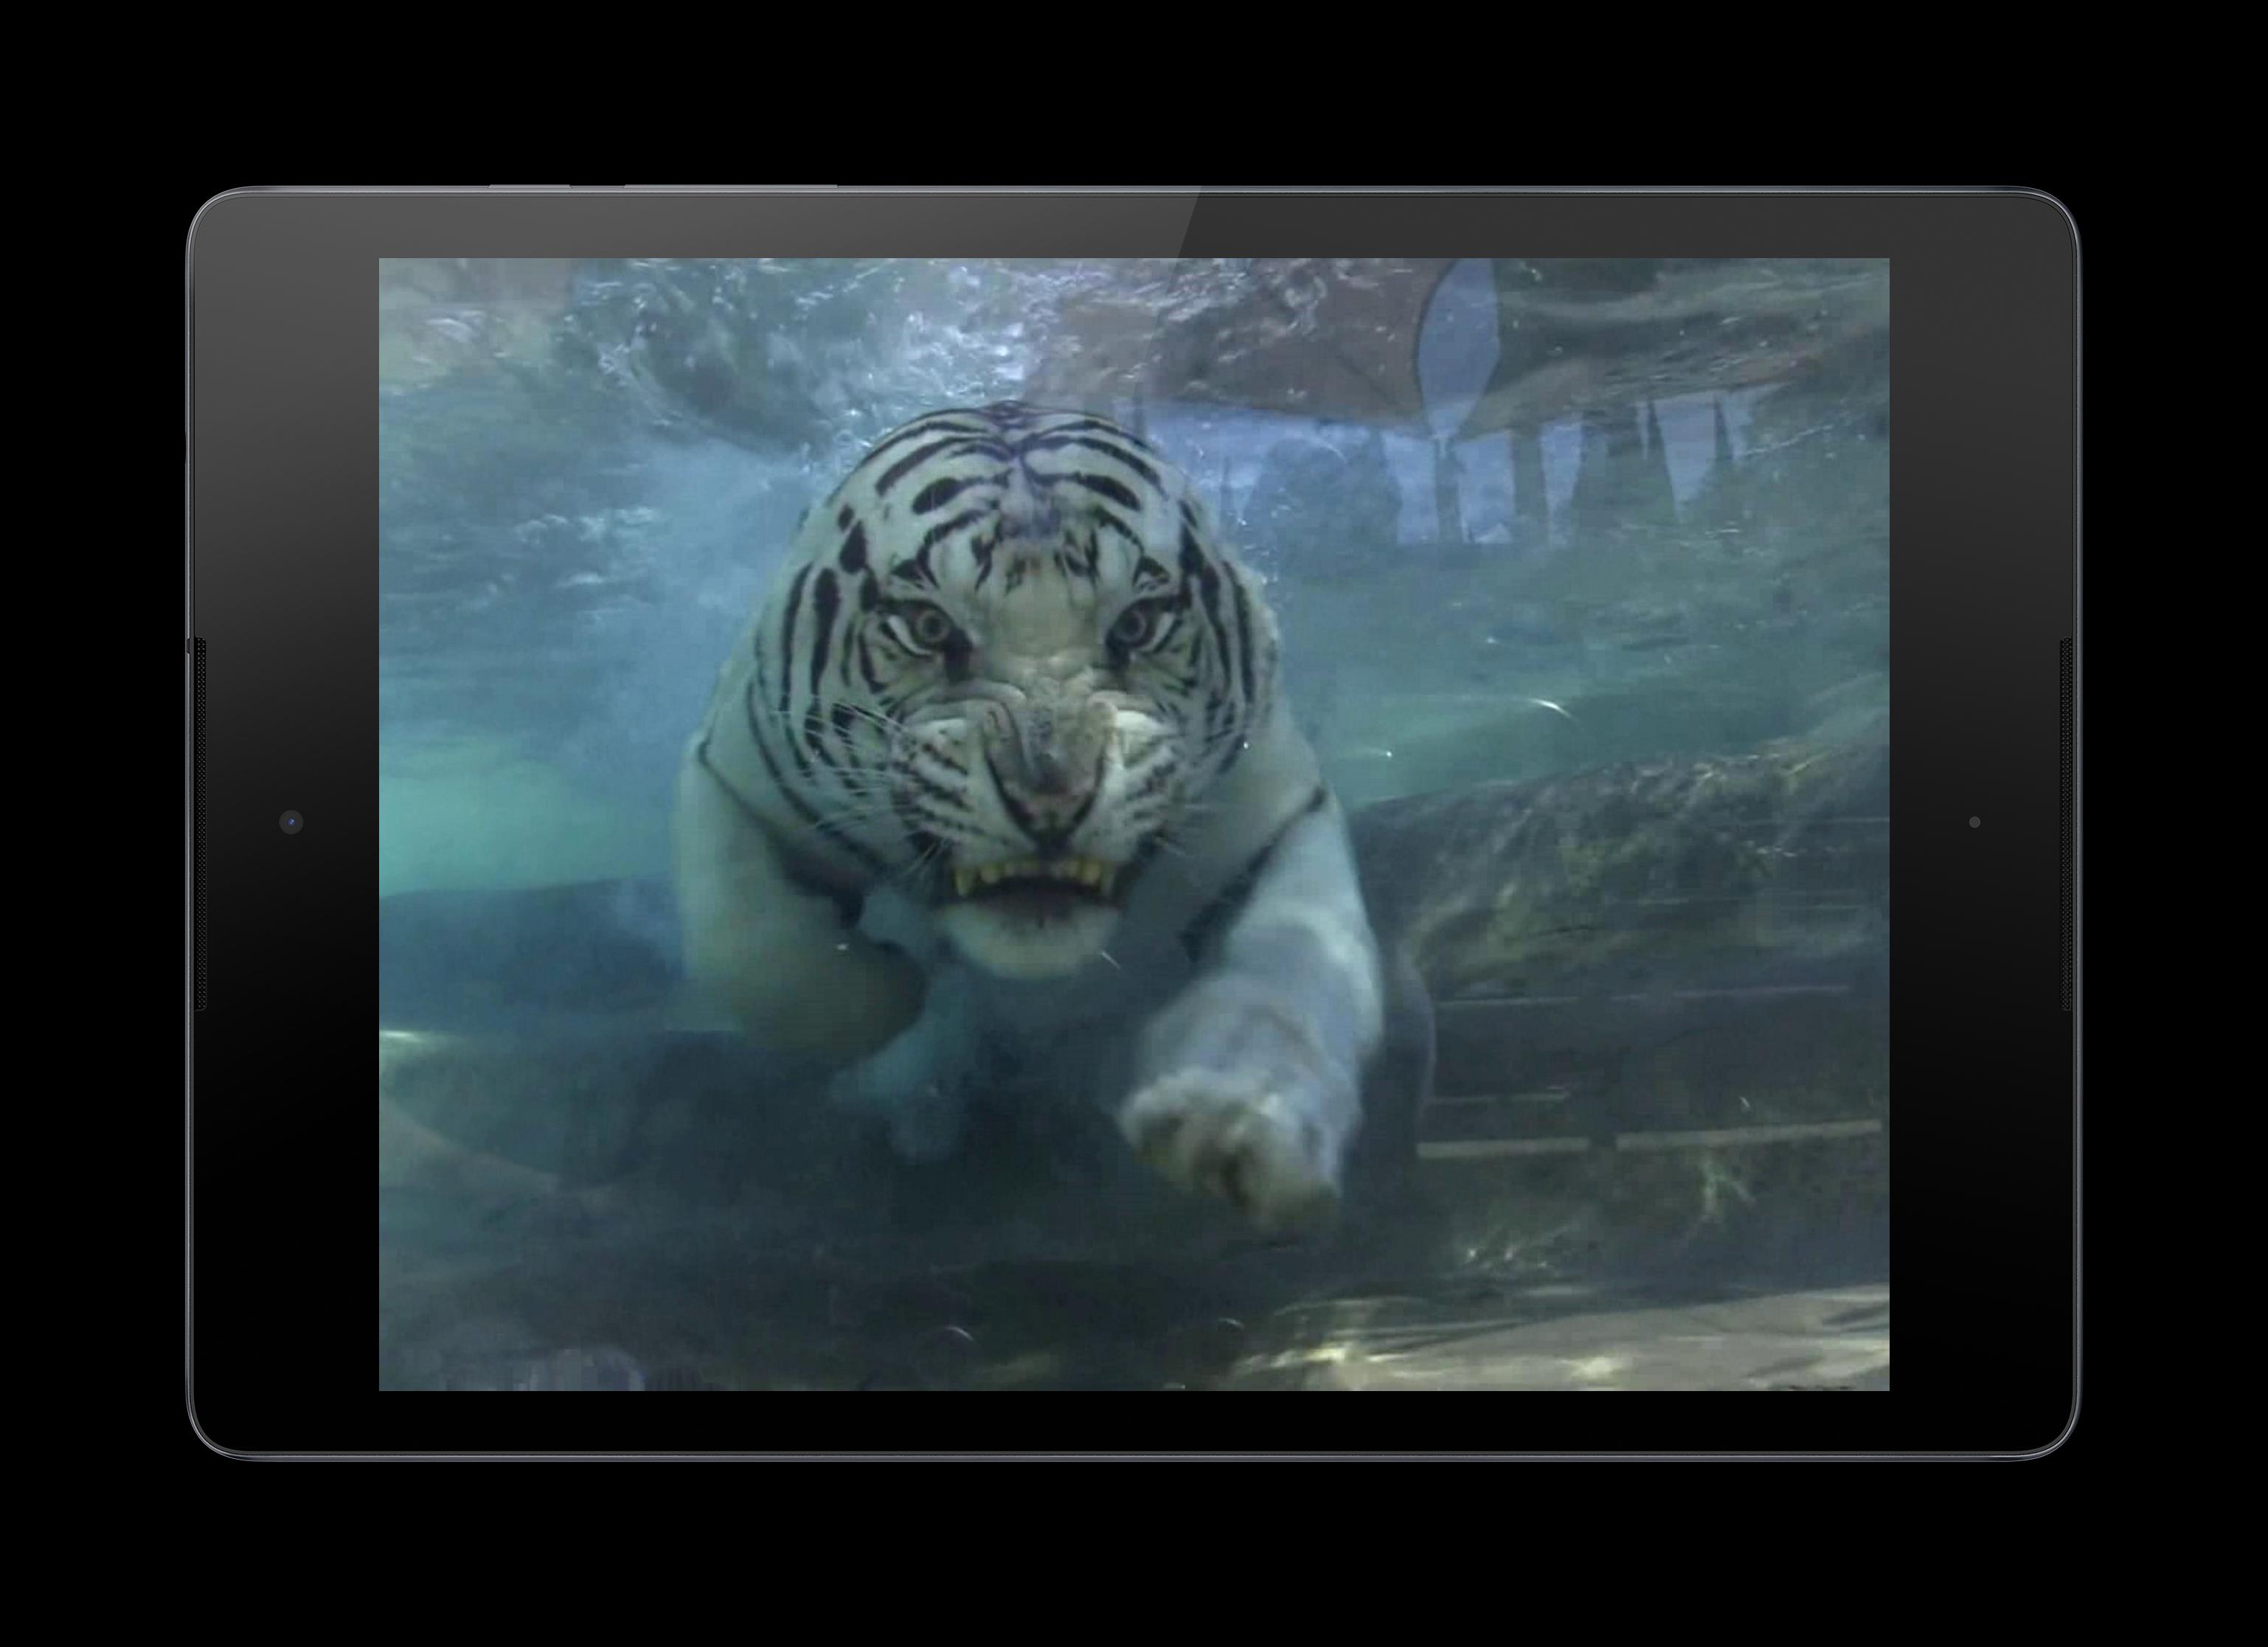 Тайгер видео. Тигр для приложения. Живые обои на андроид тигр. Плавающие обои для андроида тигр чтобы двигался.